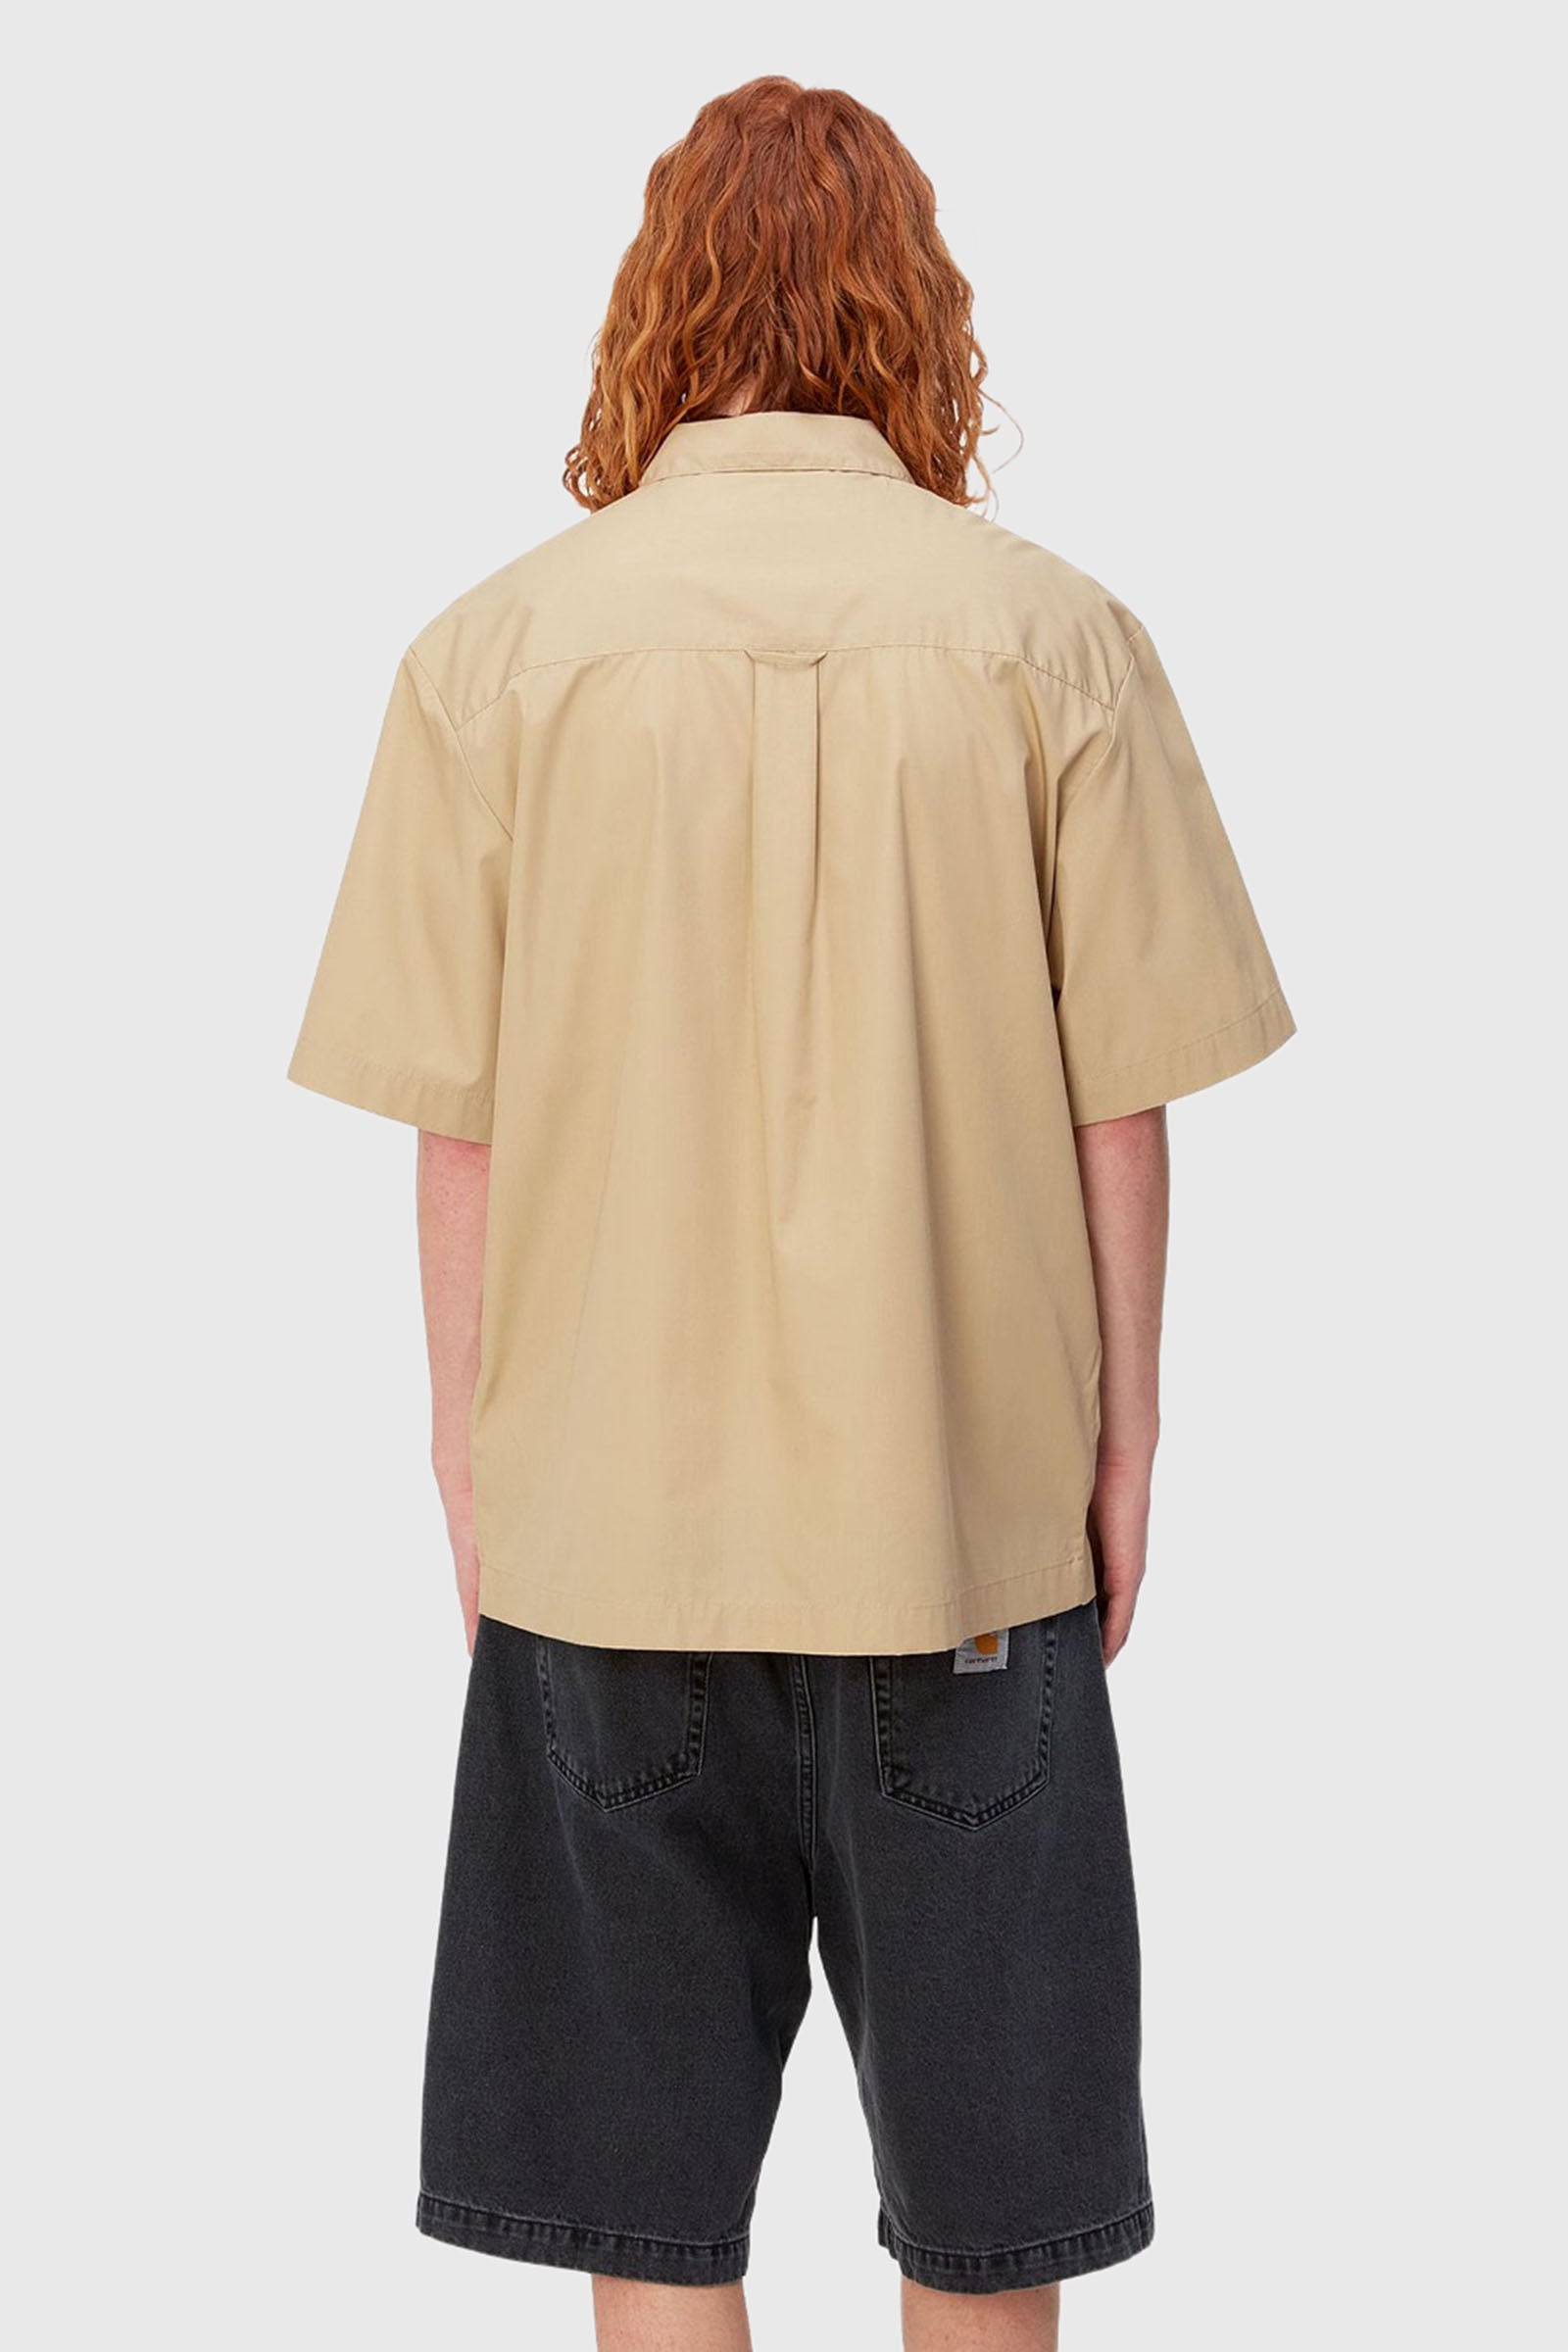 Carhartt Wip S/s Craft Shirt Beige Uomo - 3